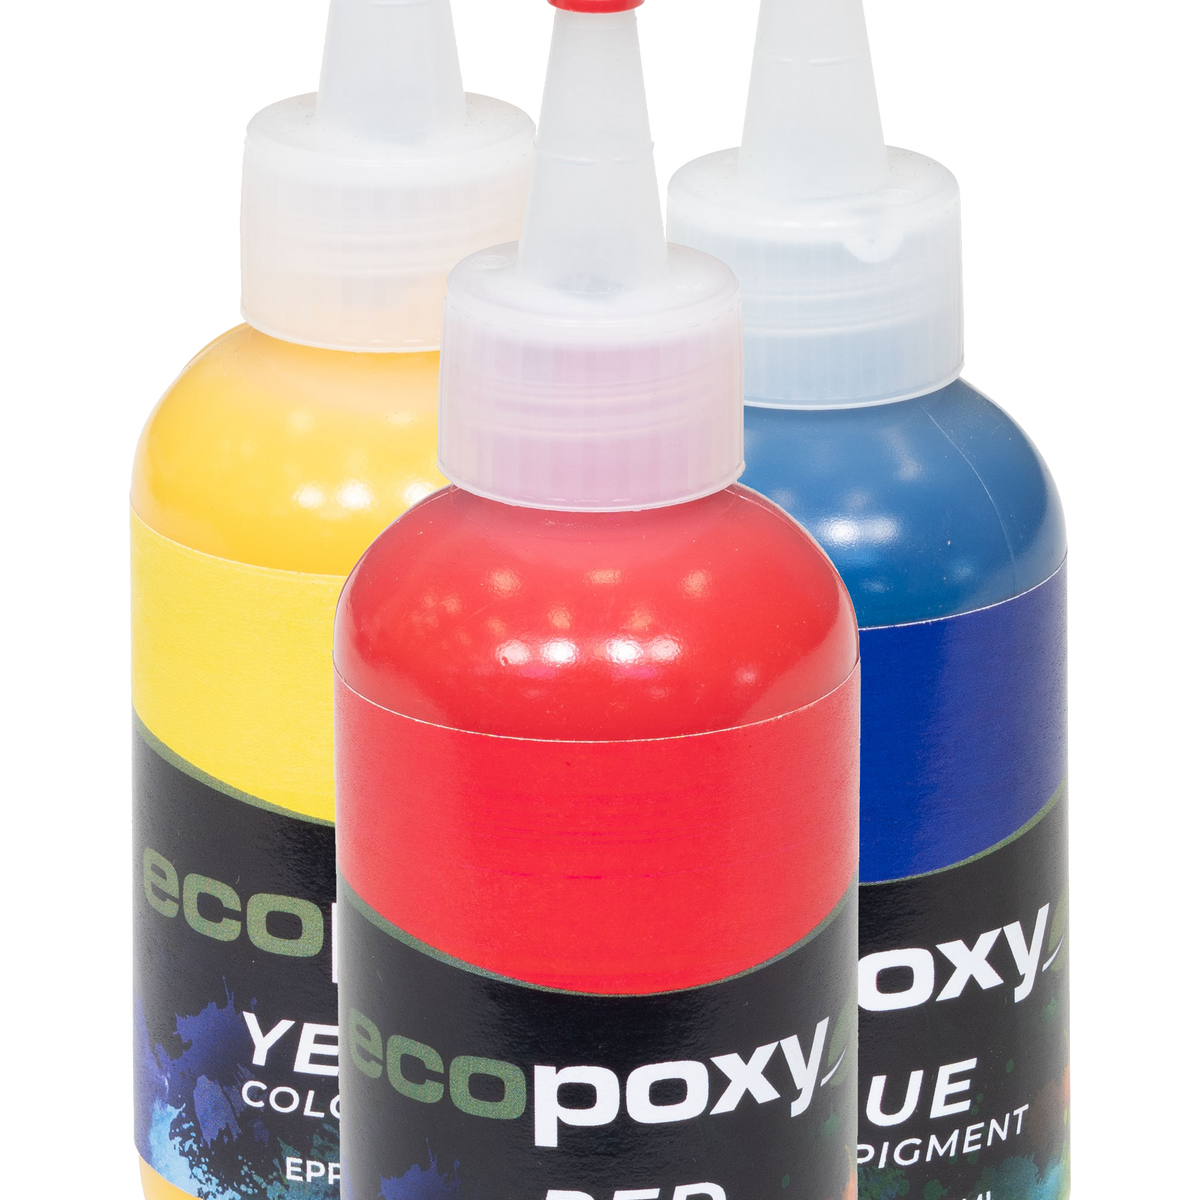 Hesroicy Epoxy Pigment Eco-friendly High Concentrated Liquid UV Epoxy Dye  Liquid Accessories for Home 